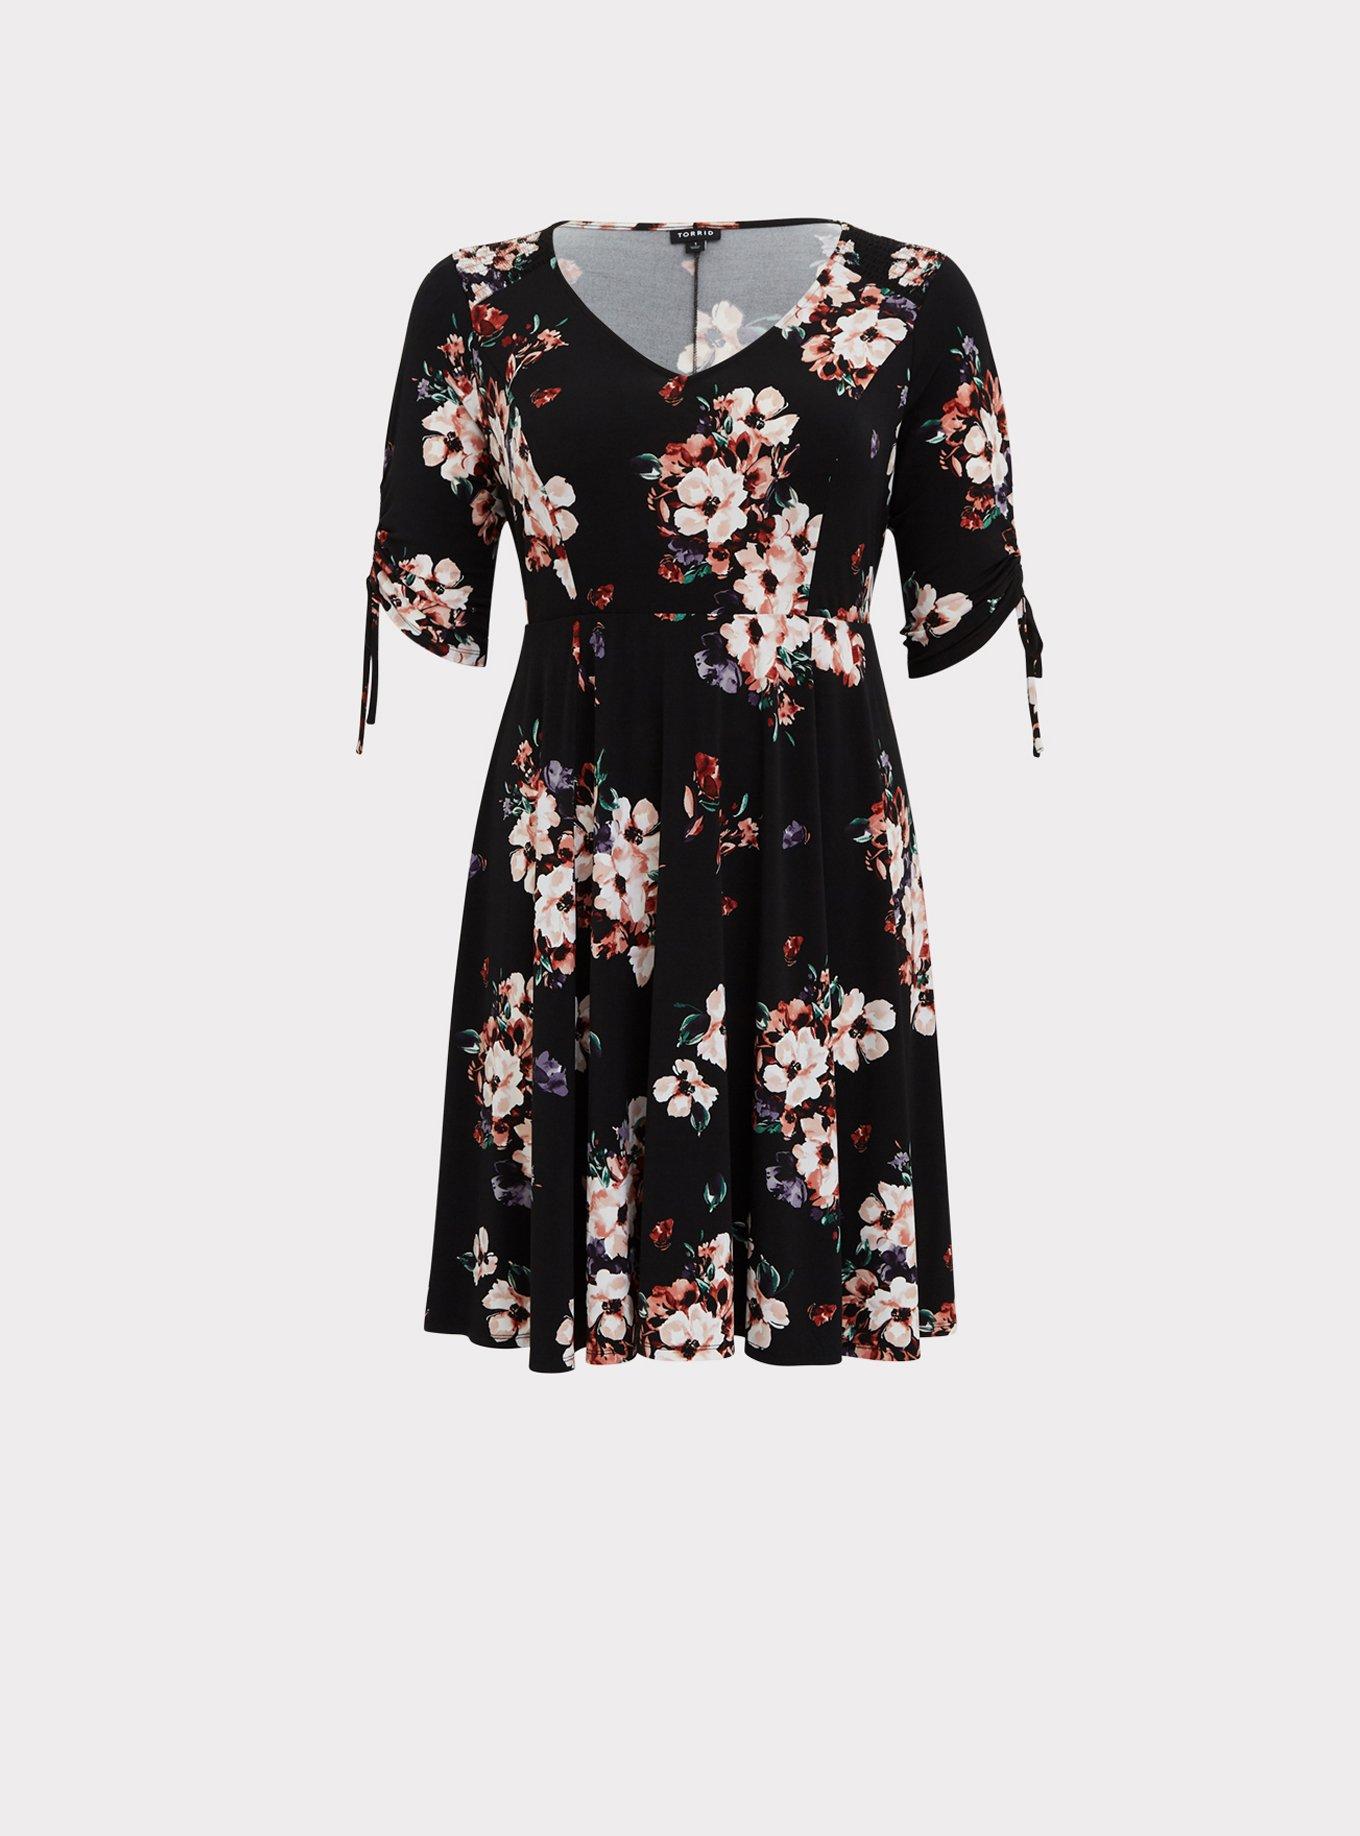 Plus Size - Black Floral Studio Knit Drawstring Sleeve Dress - Torrid